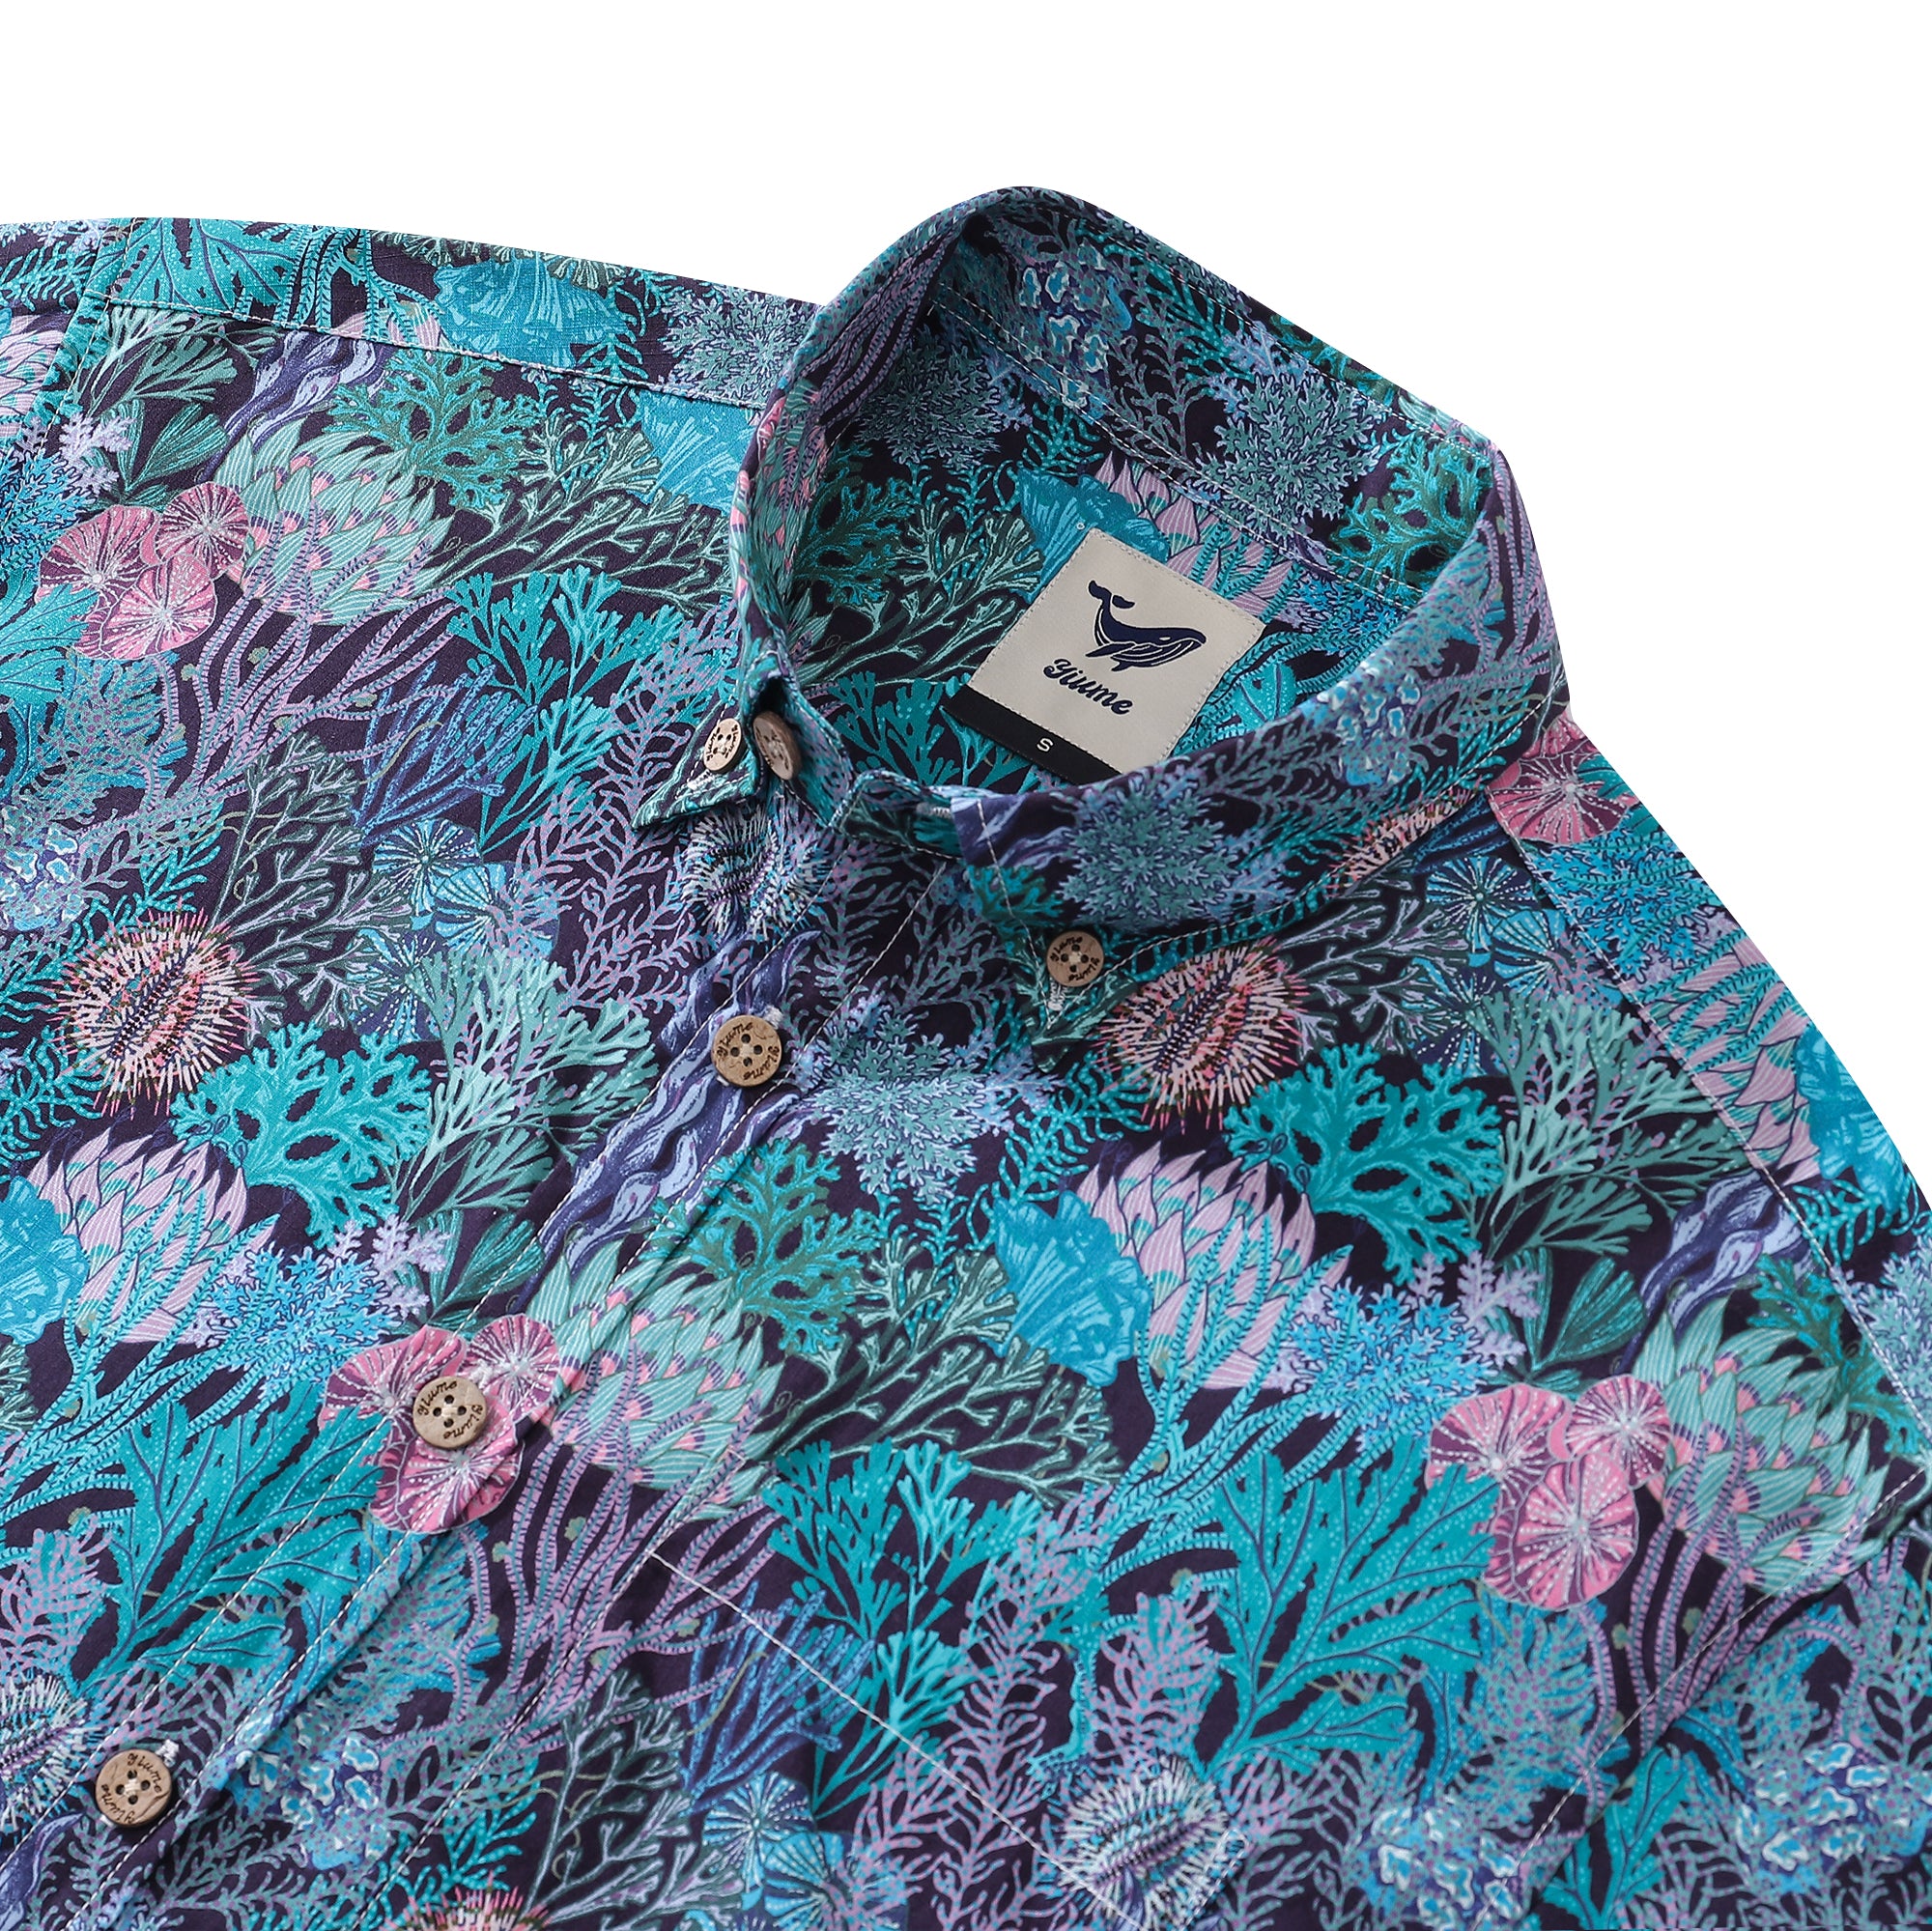 Men's Hawaiian Shirt Mysteries of the Deep Sea Print Cotton Button-down Short Sleeve Aloha Shirt